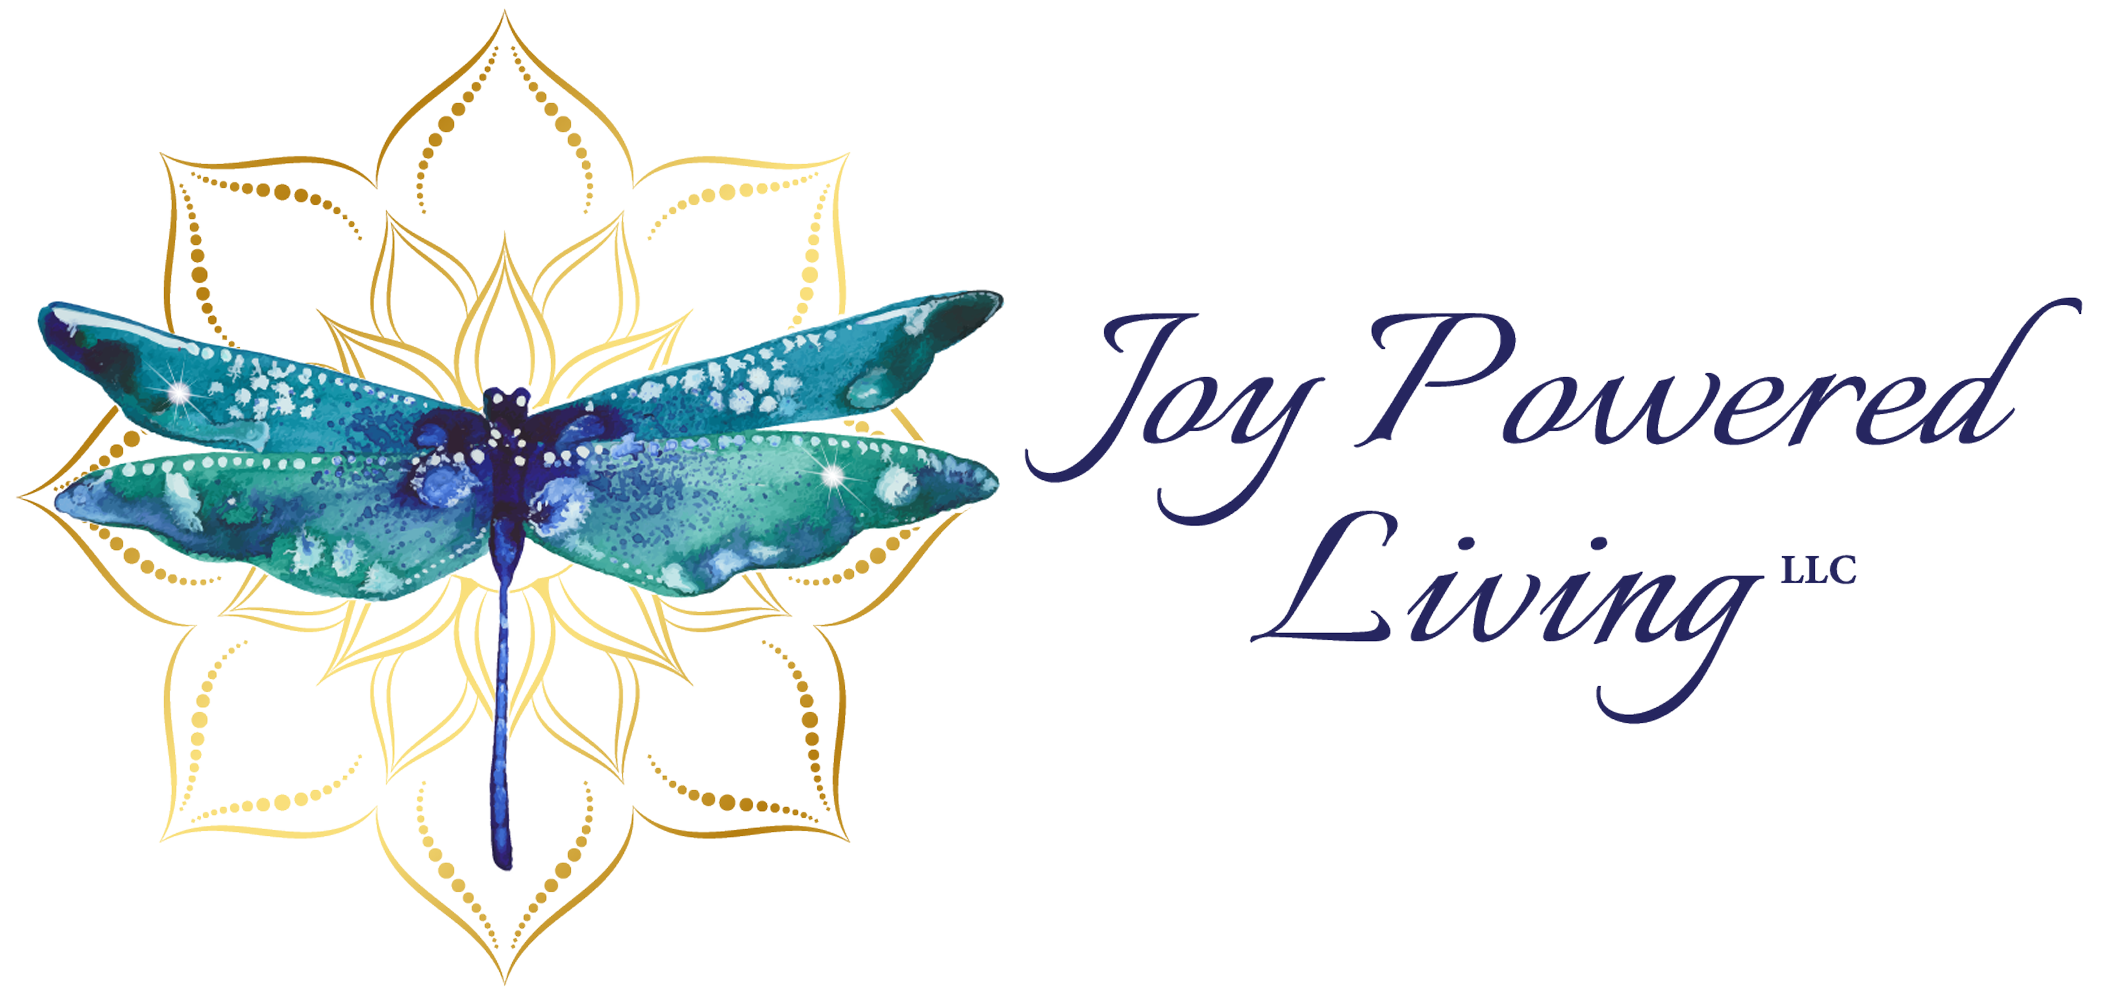 Joy Powered Living, LLC